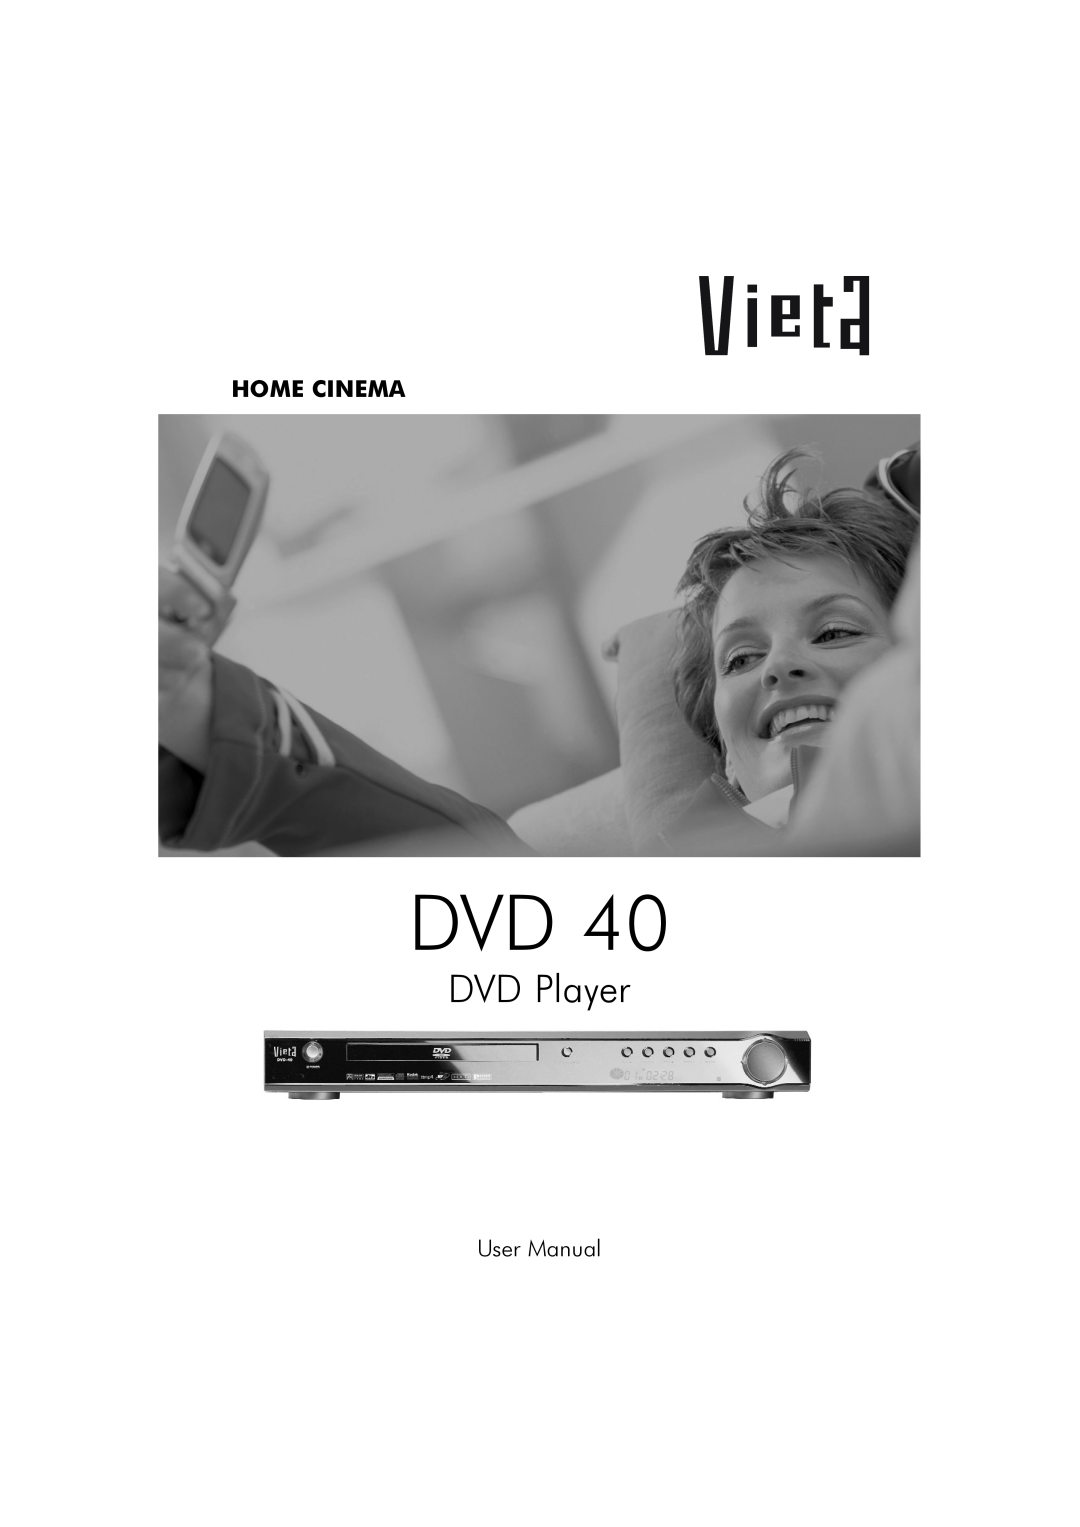 Kodak DVD 40 user manual User Manual, DVD Player, Home Cinema 